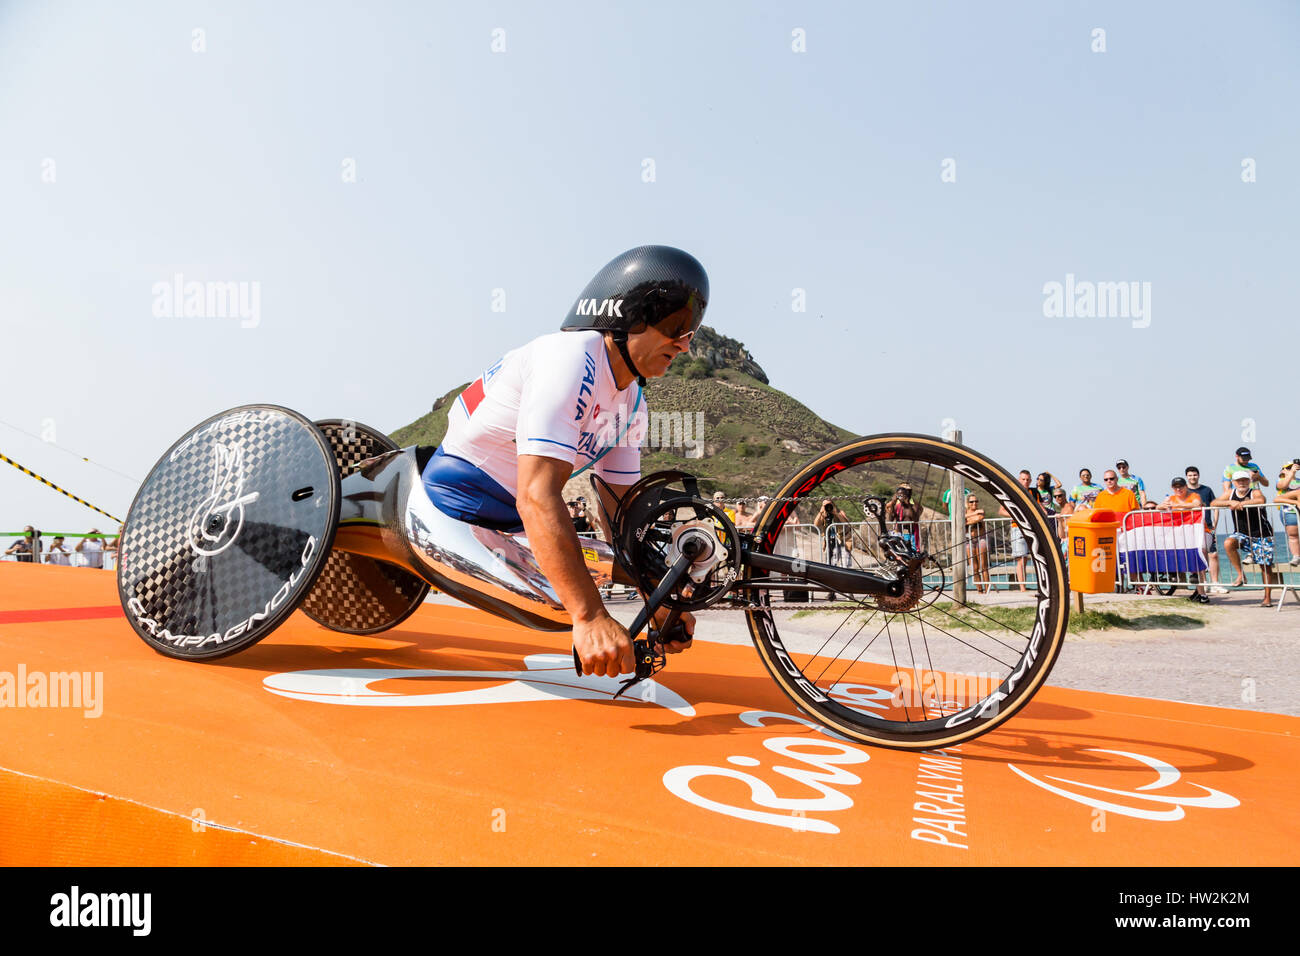 Alex Zanardi is starting the race in Rio Parlympic Games 2016 Stock Photo